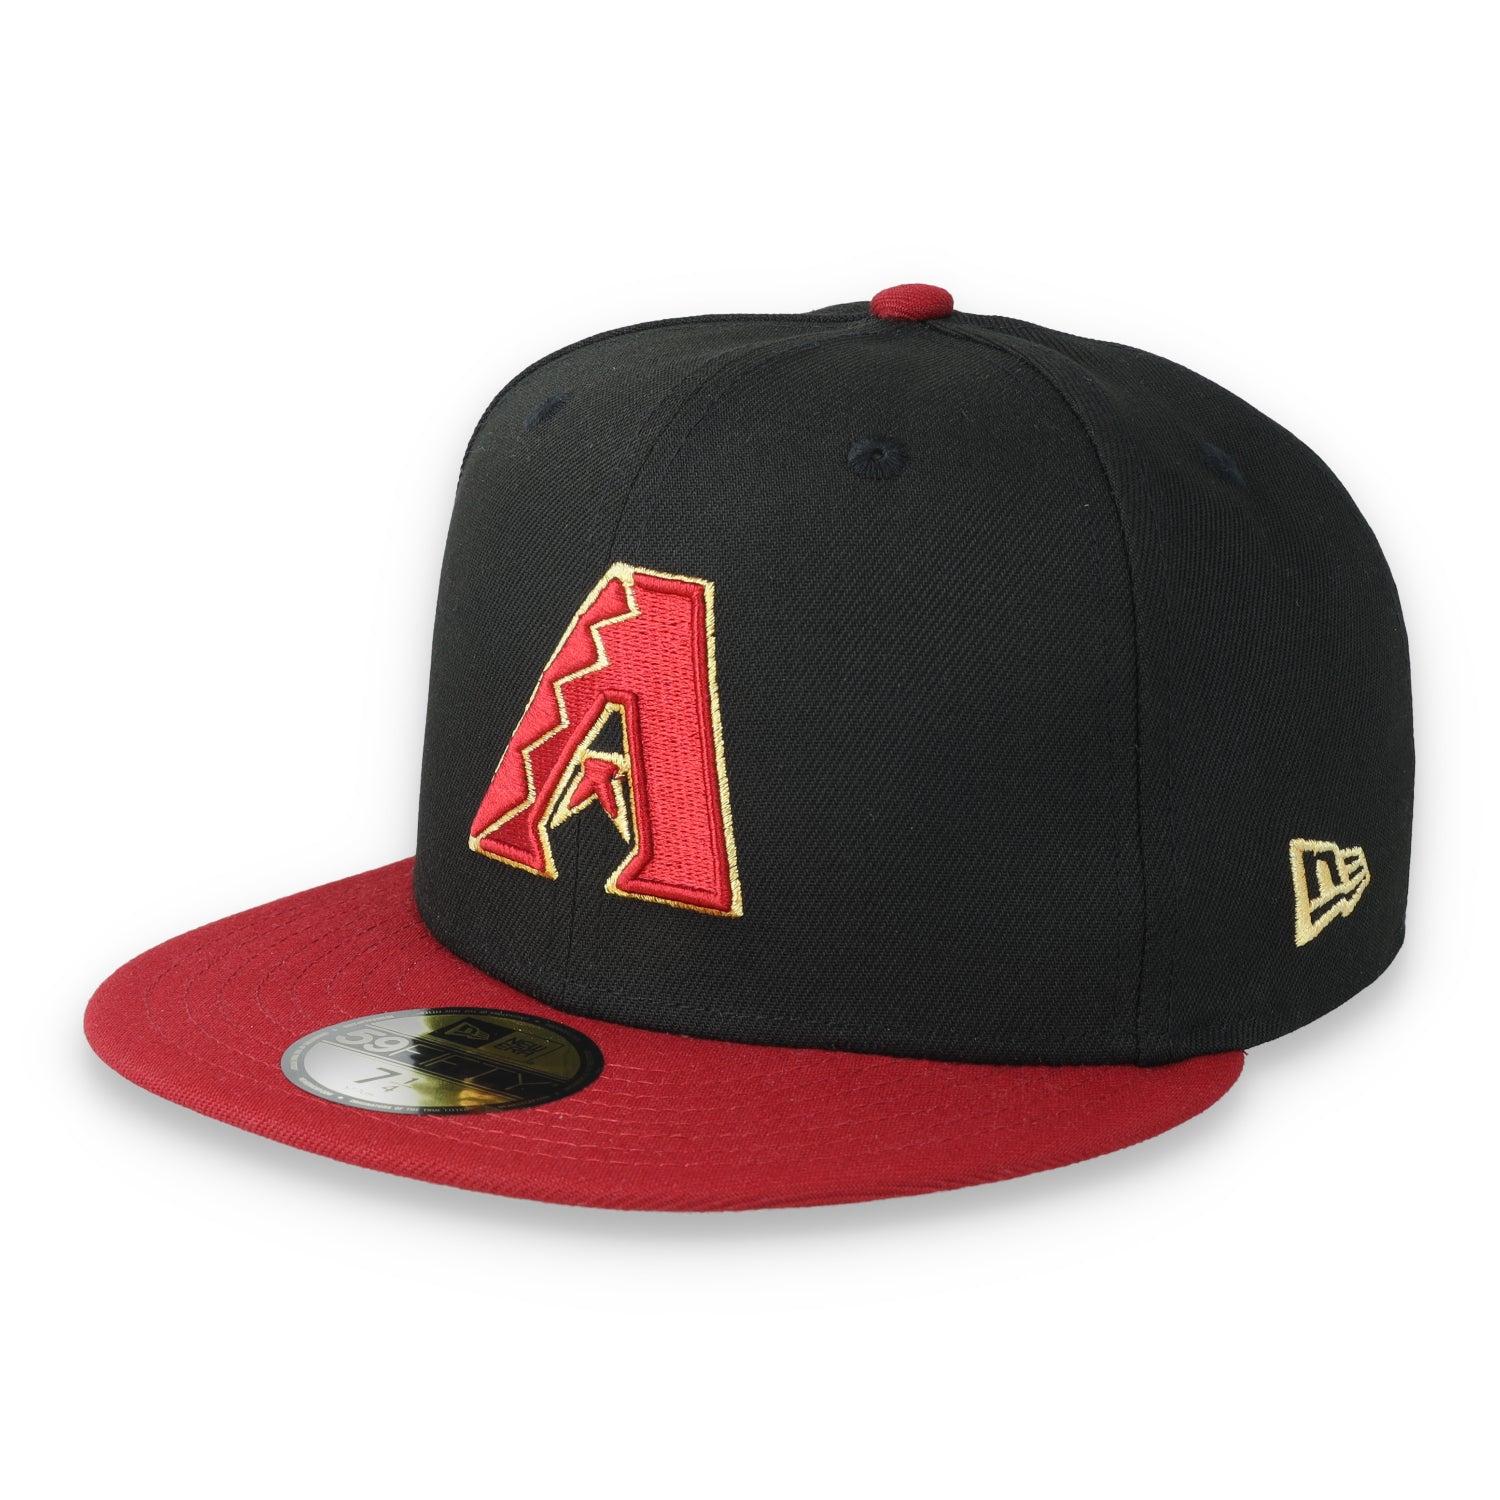 New Era Arizona Diamondbacks Game Day 59FIFTY Fitted Hat